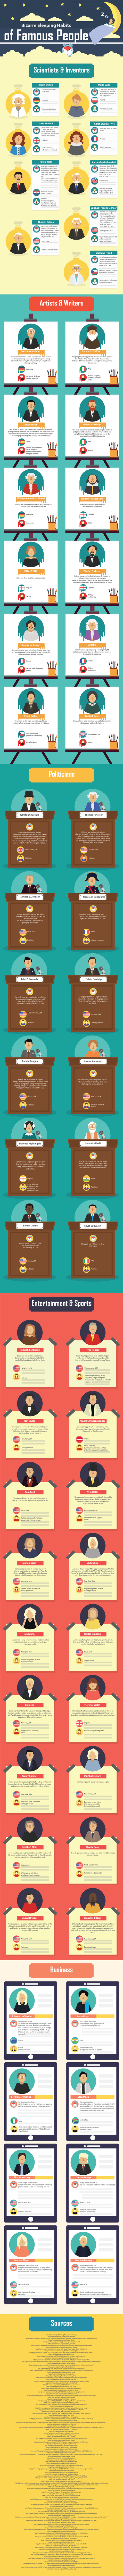 Bizarre Sleeping Habits of Famous People Infographic